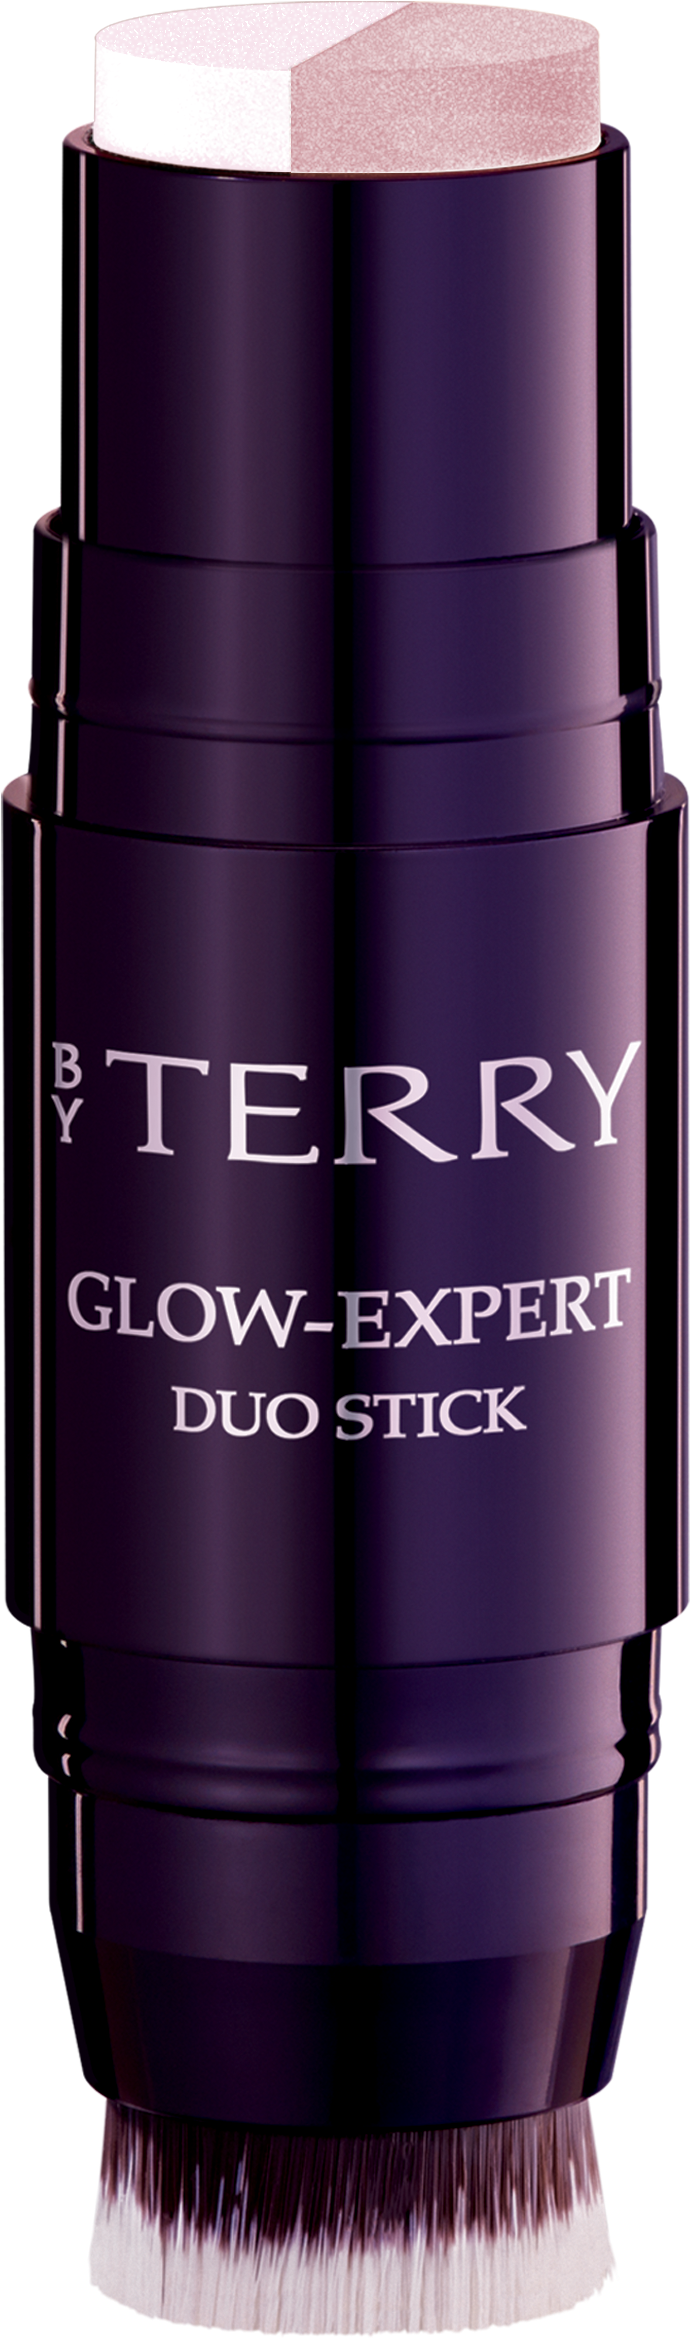 Glow-expert Duo Stick - Cosmetics (3508x4961), Png Download